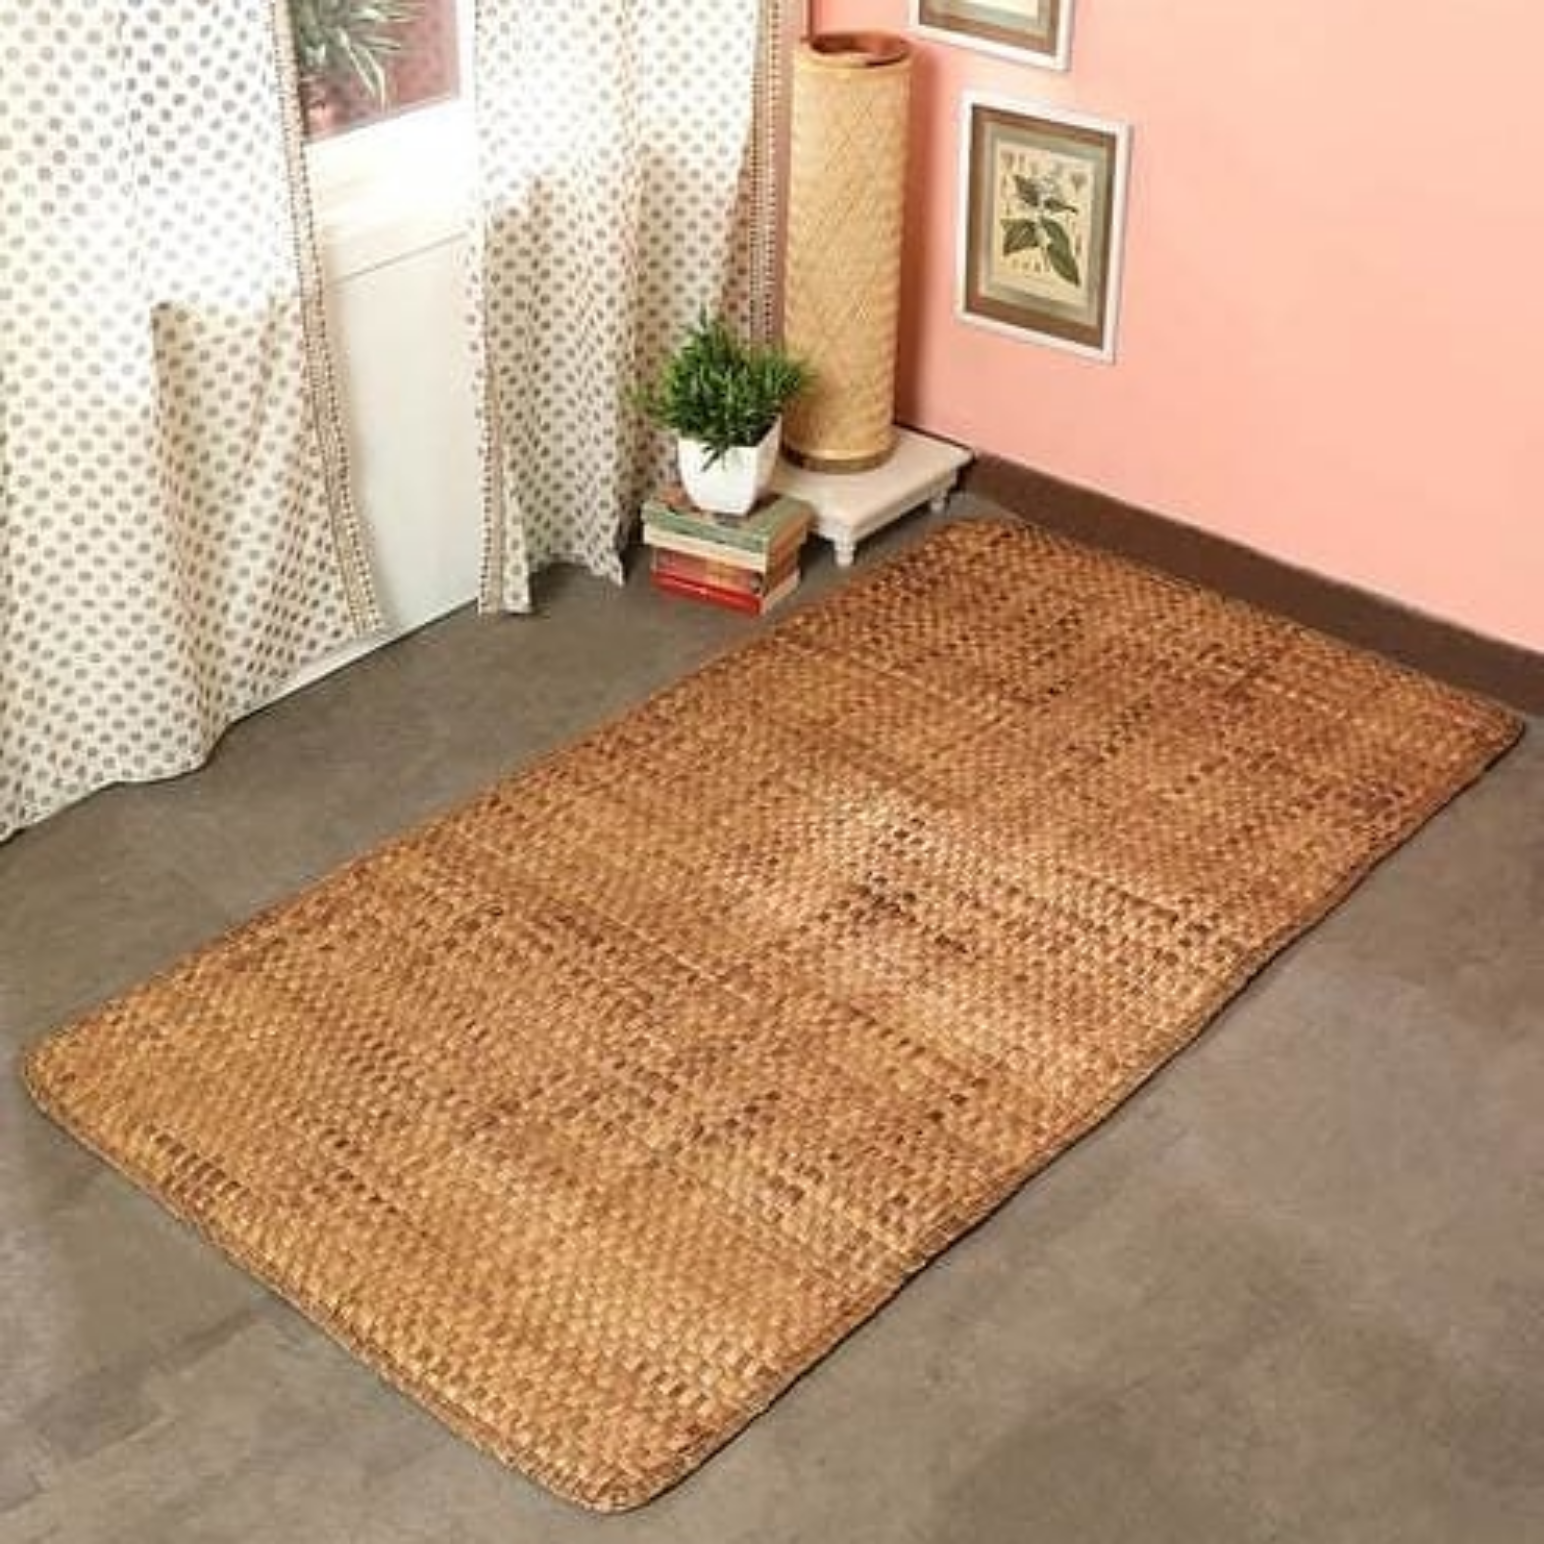 Berucht Of later Ananiver Kraftinn Yoga Mat Cum Carpet - Water Hyacinth – Woodygrass